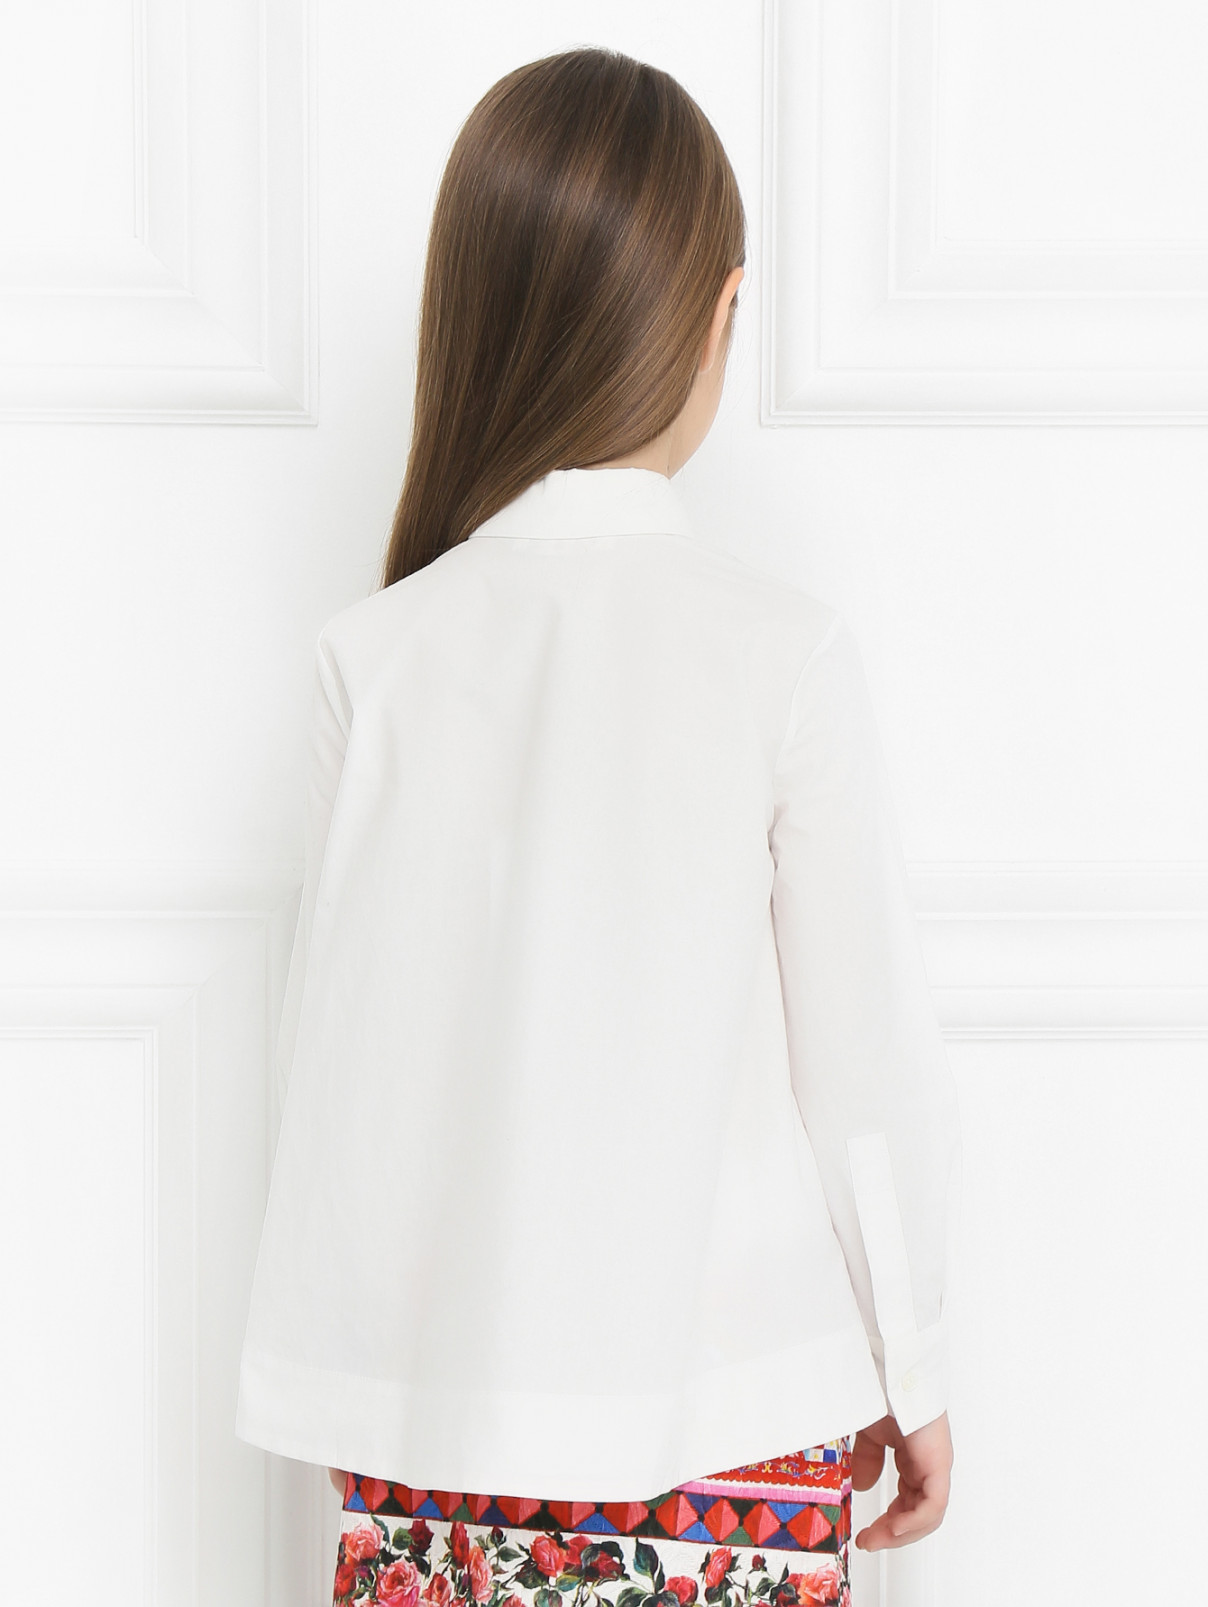 Рубашка из хлопка Marni  –  Модель Верх-Низ1  – Цвет:  Белый